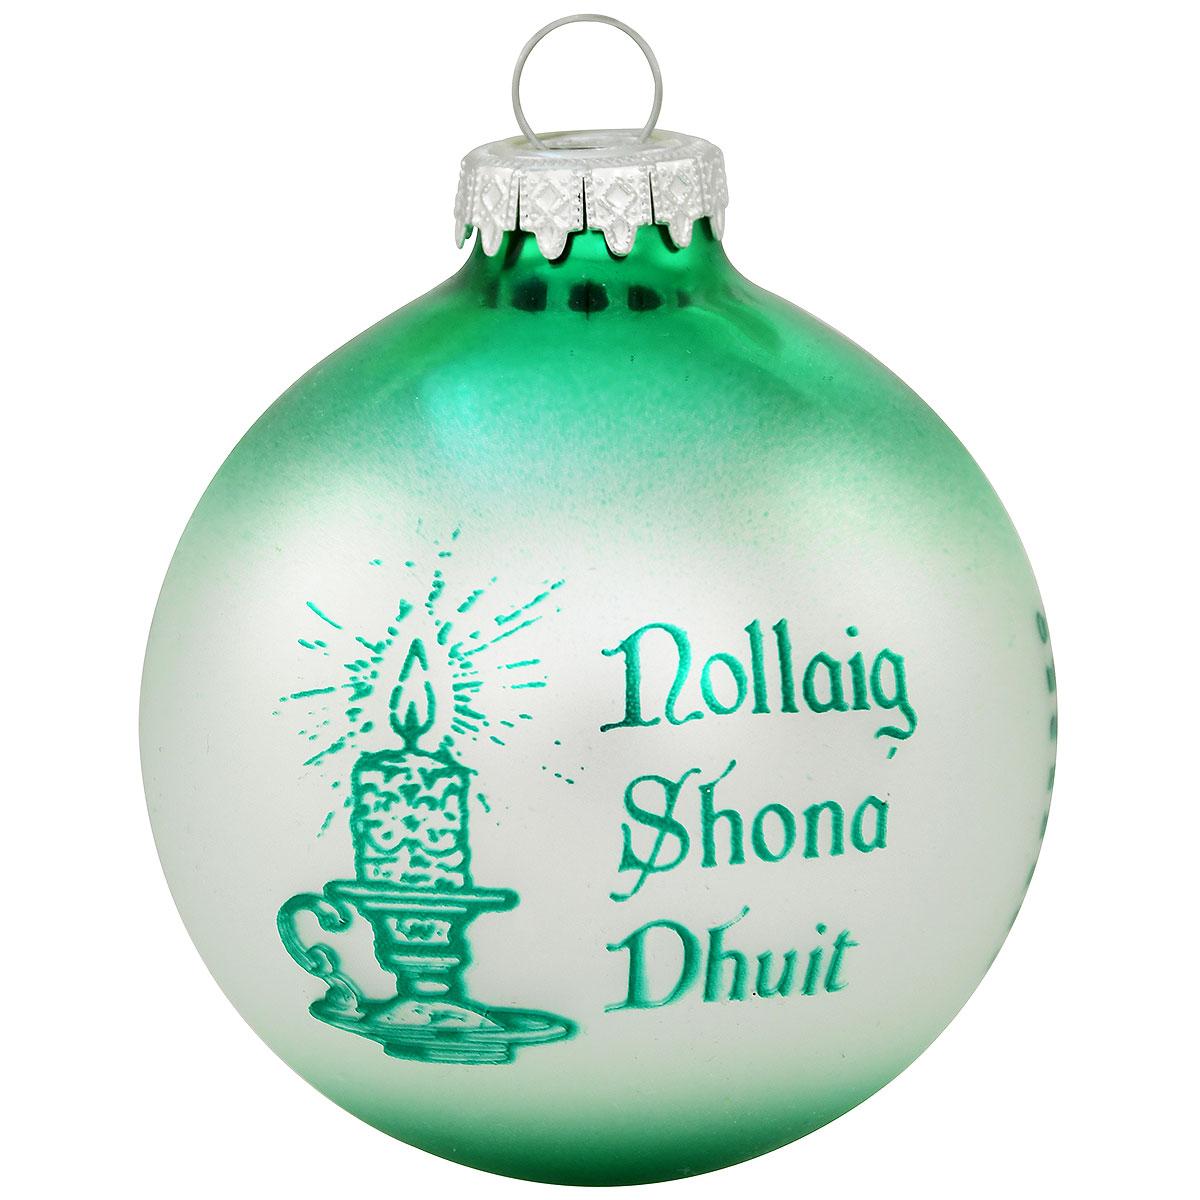 Ireland Christmas Custom Ornament